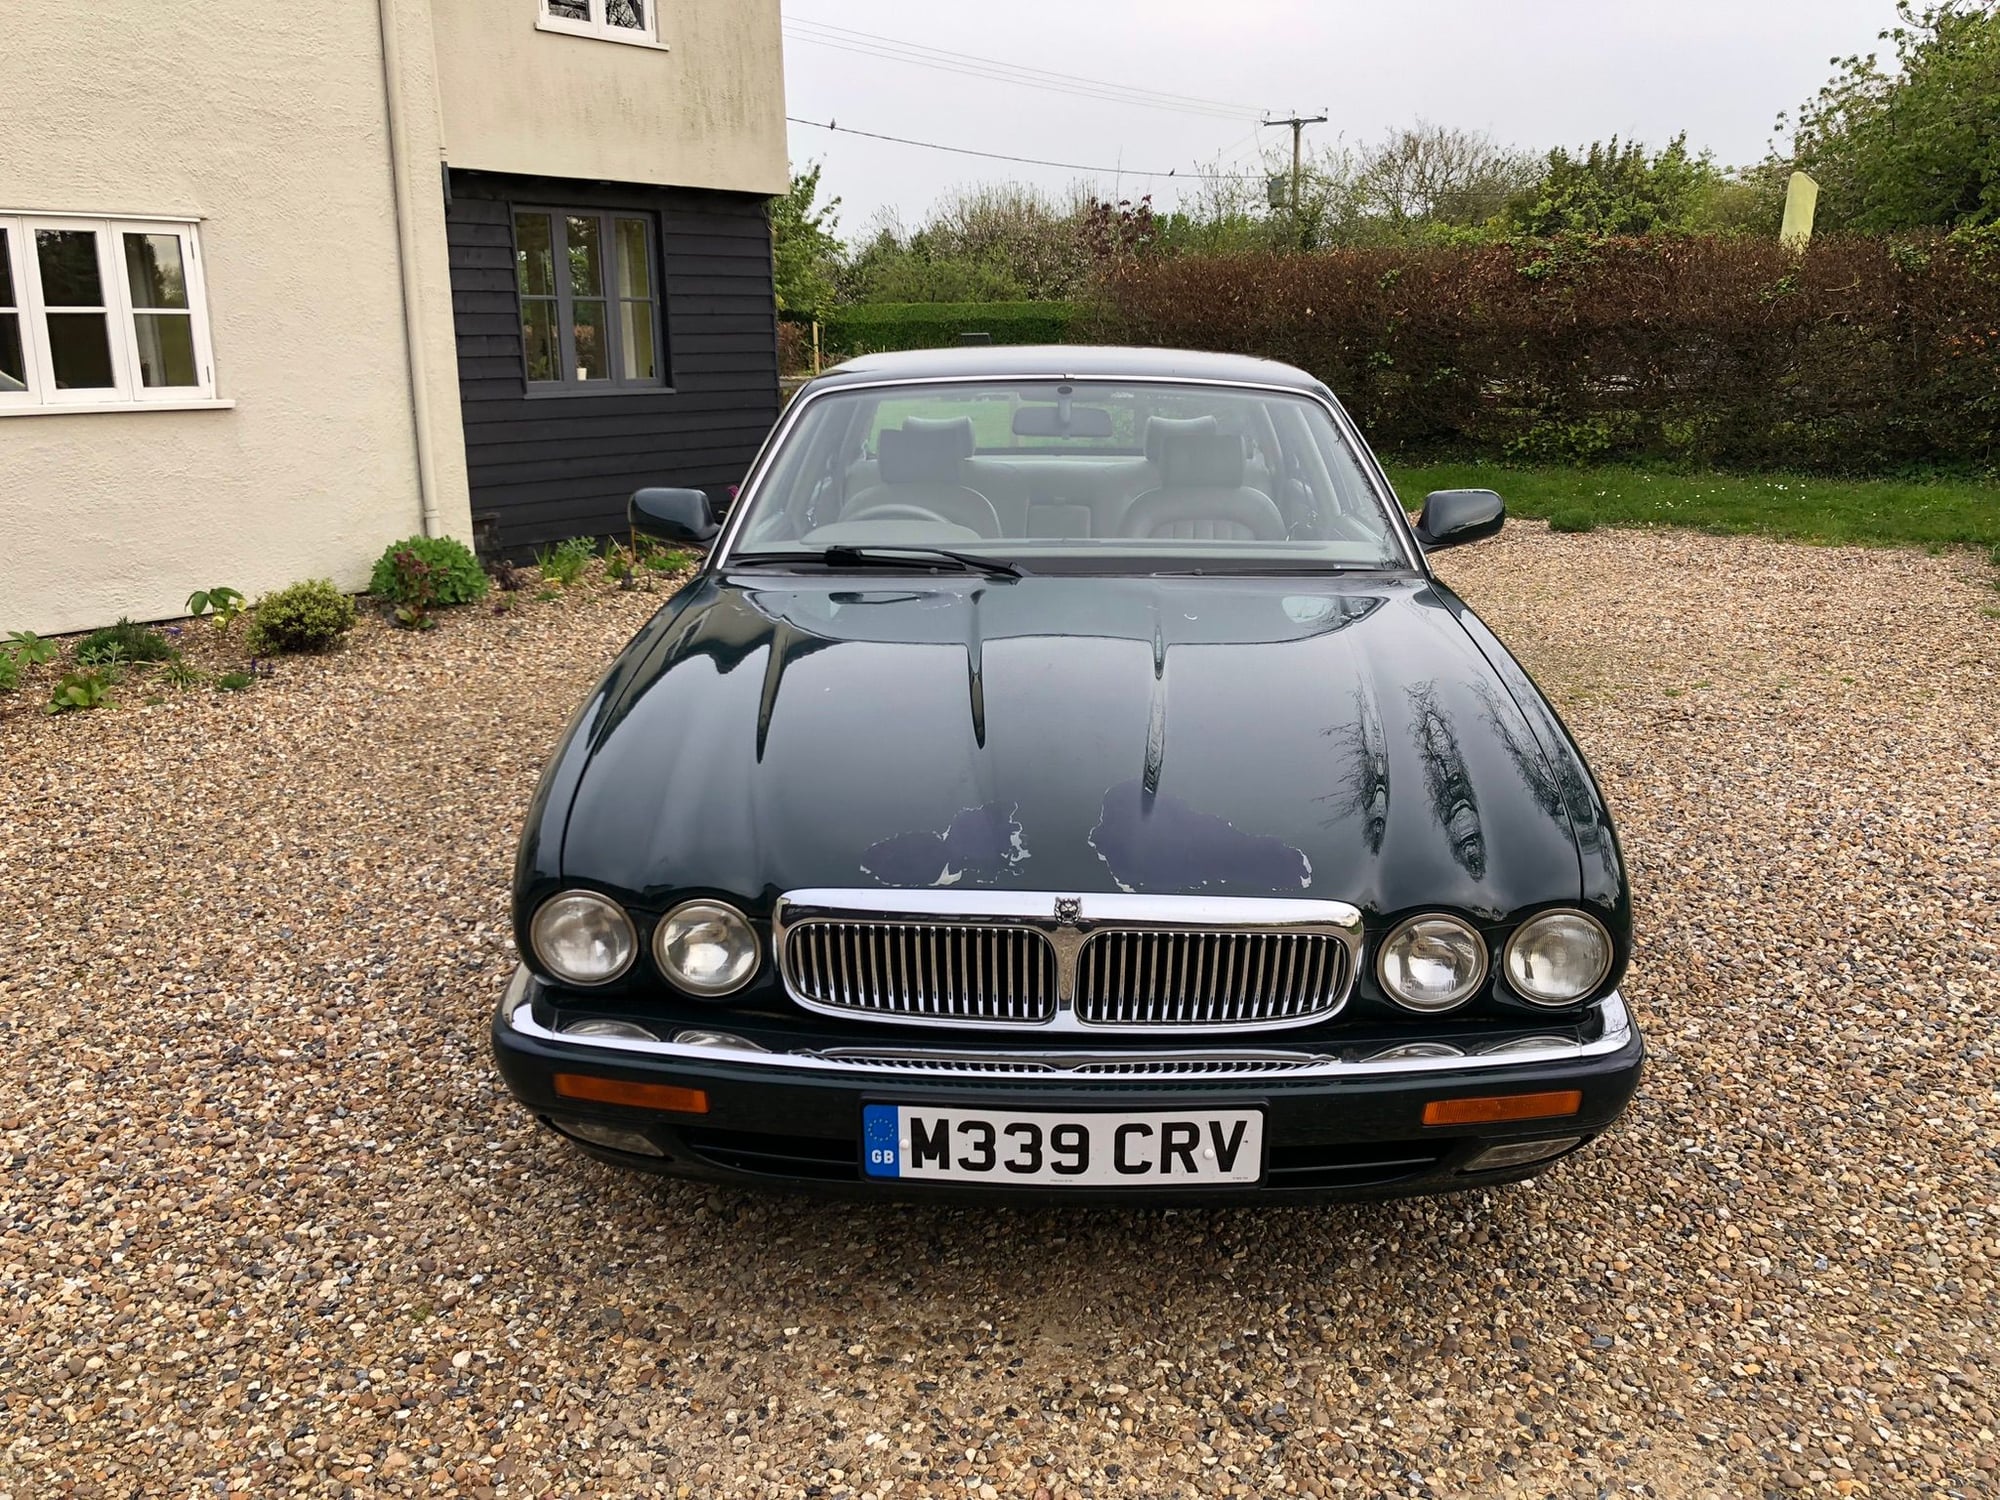 1995 Jaguar XJ6 - '95 XJ6 Sovereign 4.0 - Used - VIN SAJJHALD3BJ724959 - 79,000 Miles - 6 cyl - 2WD - Automatic - Sedan - Other - Bury St Edmunds IP29, United Kingdom